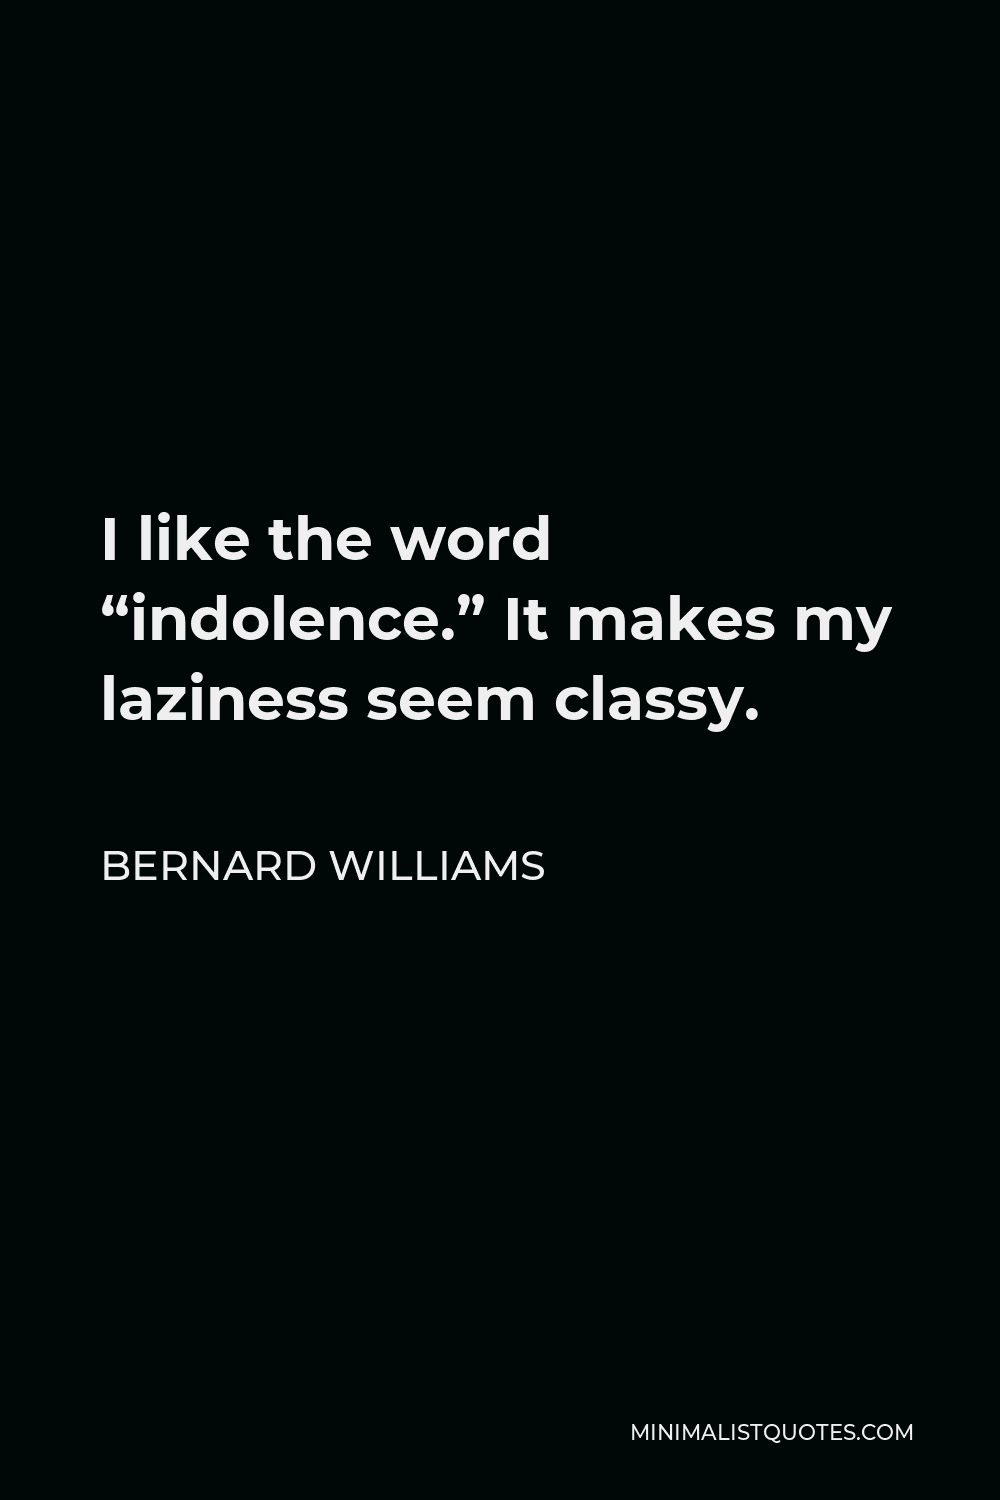 Bernard Williams Quote - I like the word “indolence.” It makes my laziness seem classy.